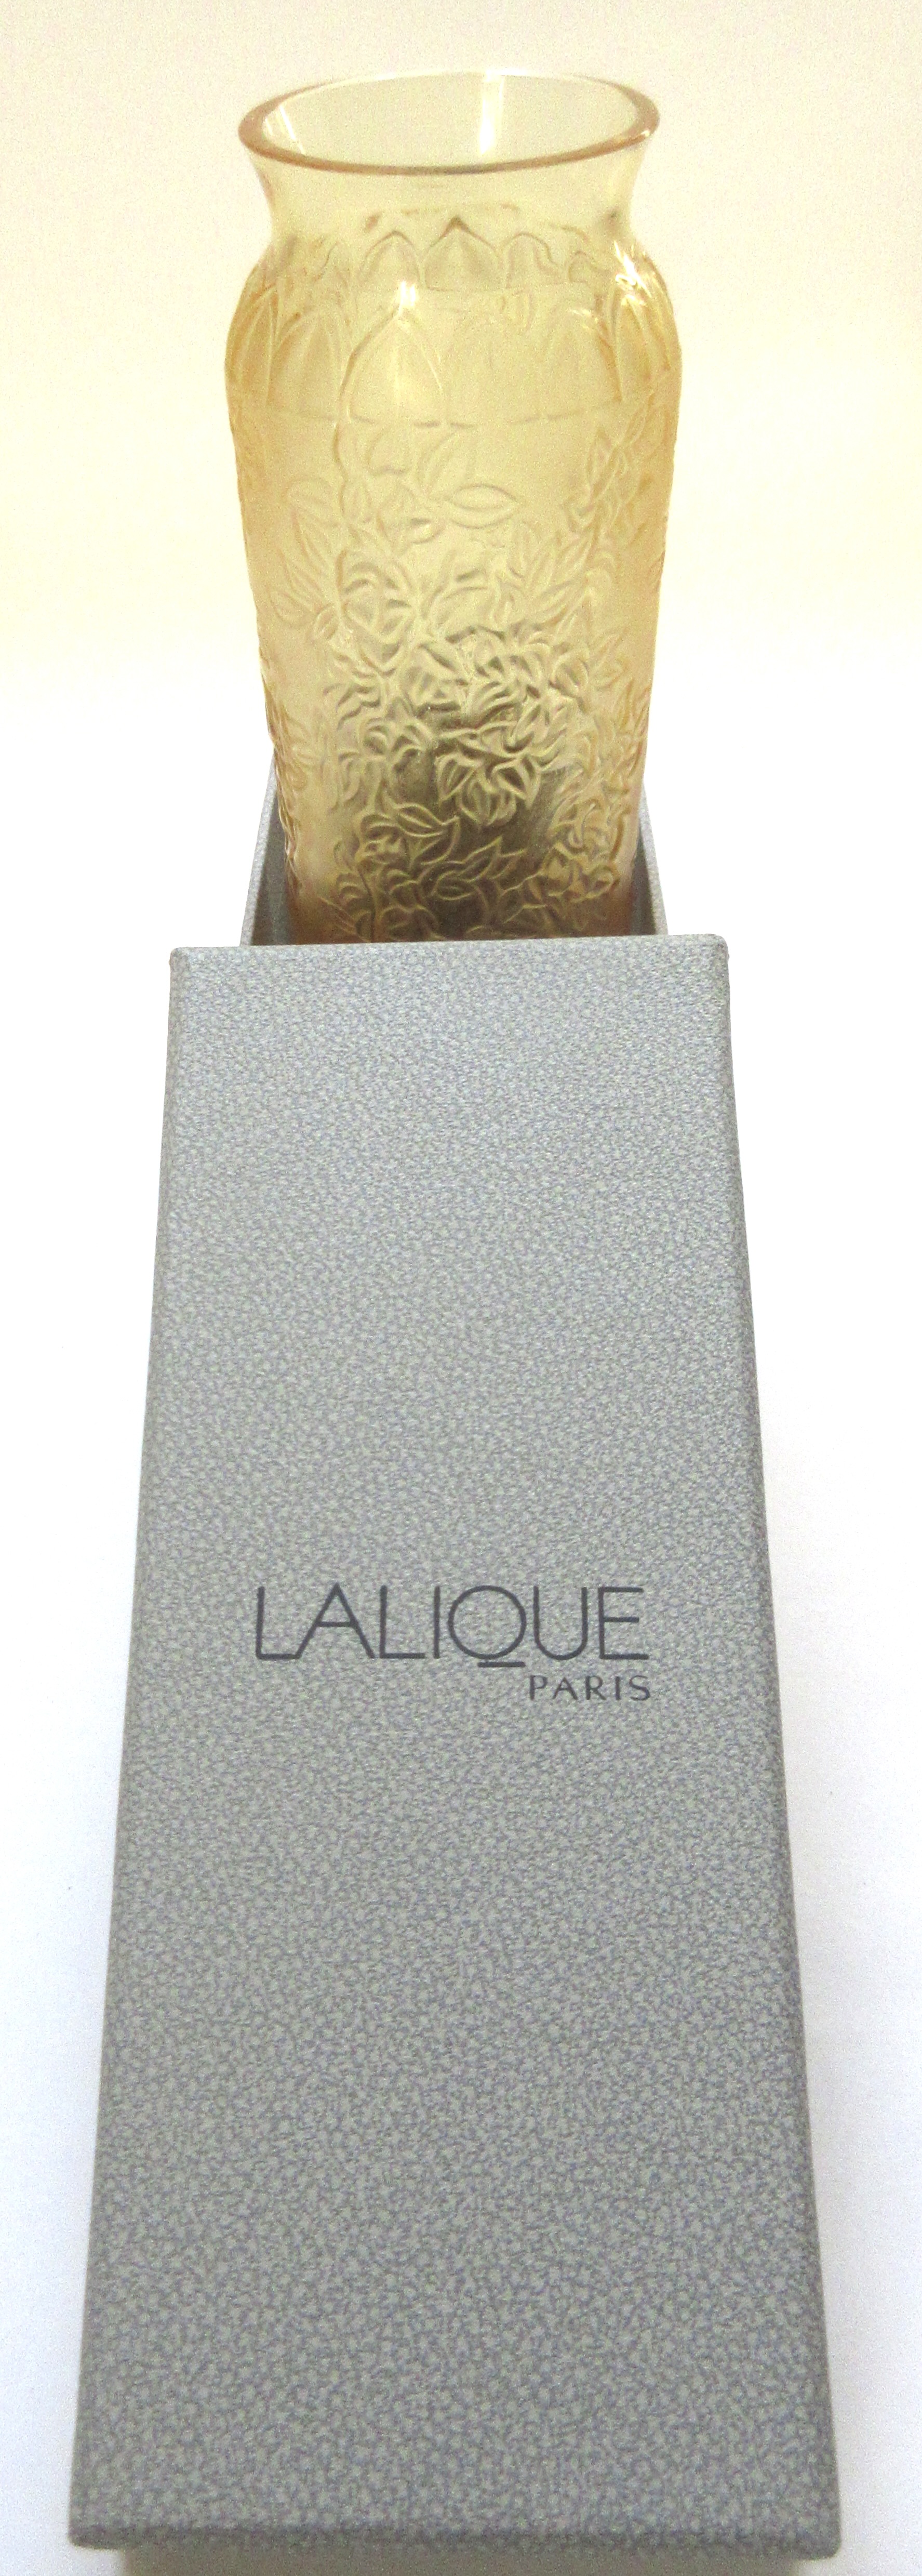 Lalique Bougainvillier Vase in Box~P77673457